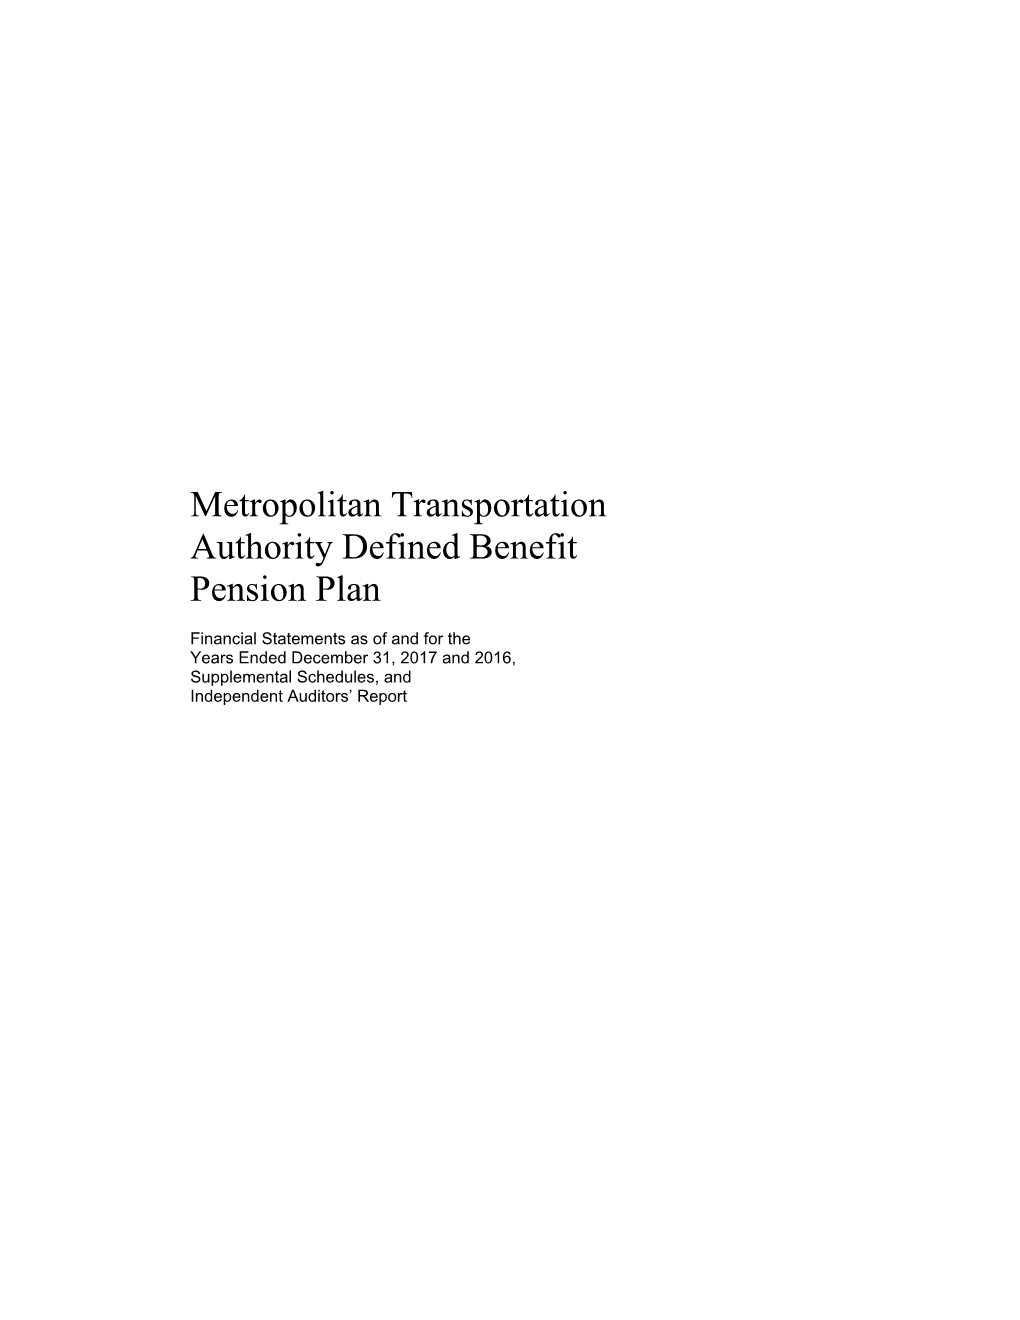 Metropolitan Transportation Authority Defined Benefit Pension Plan